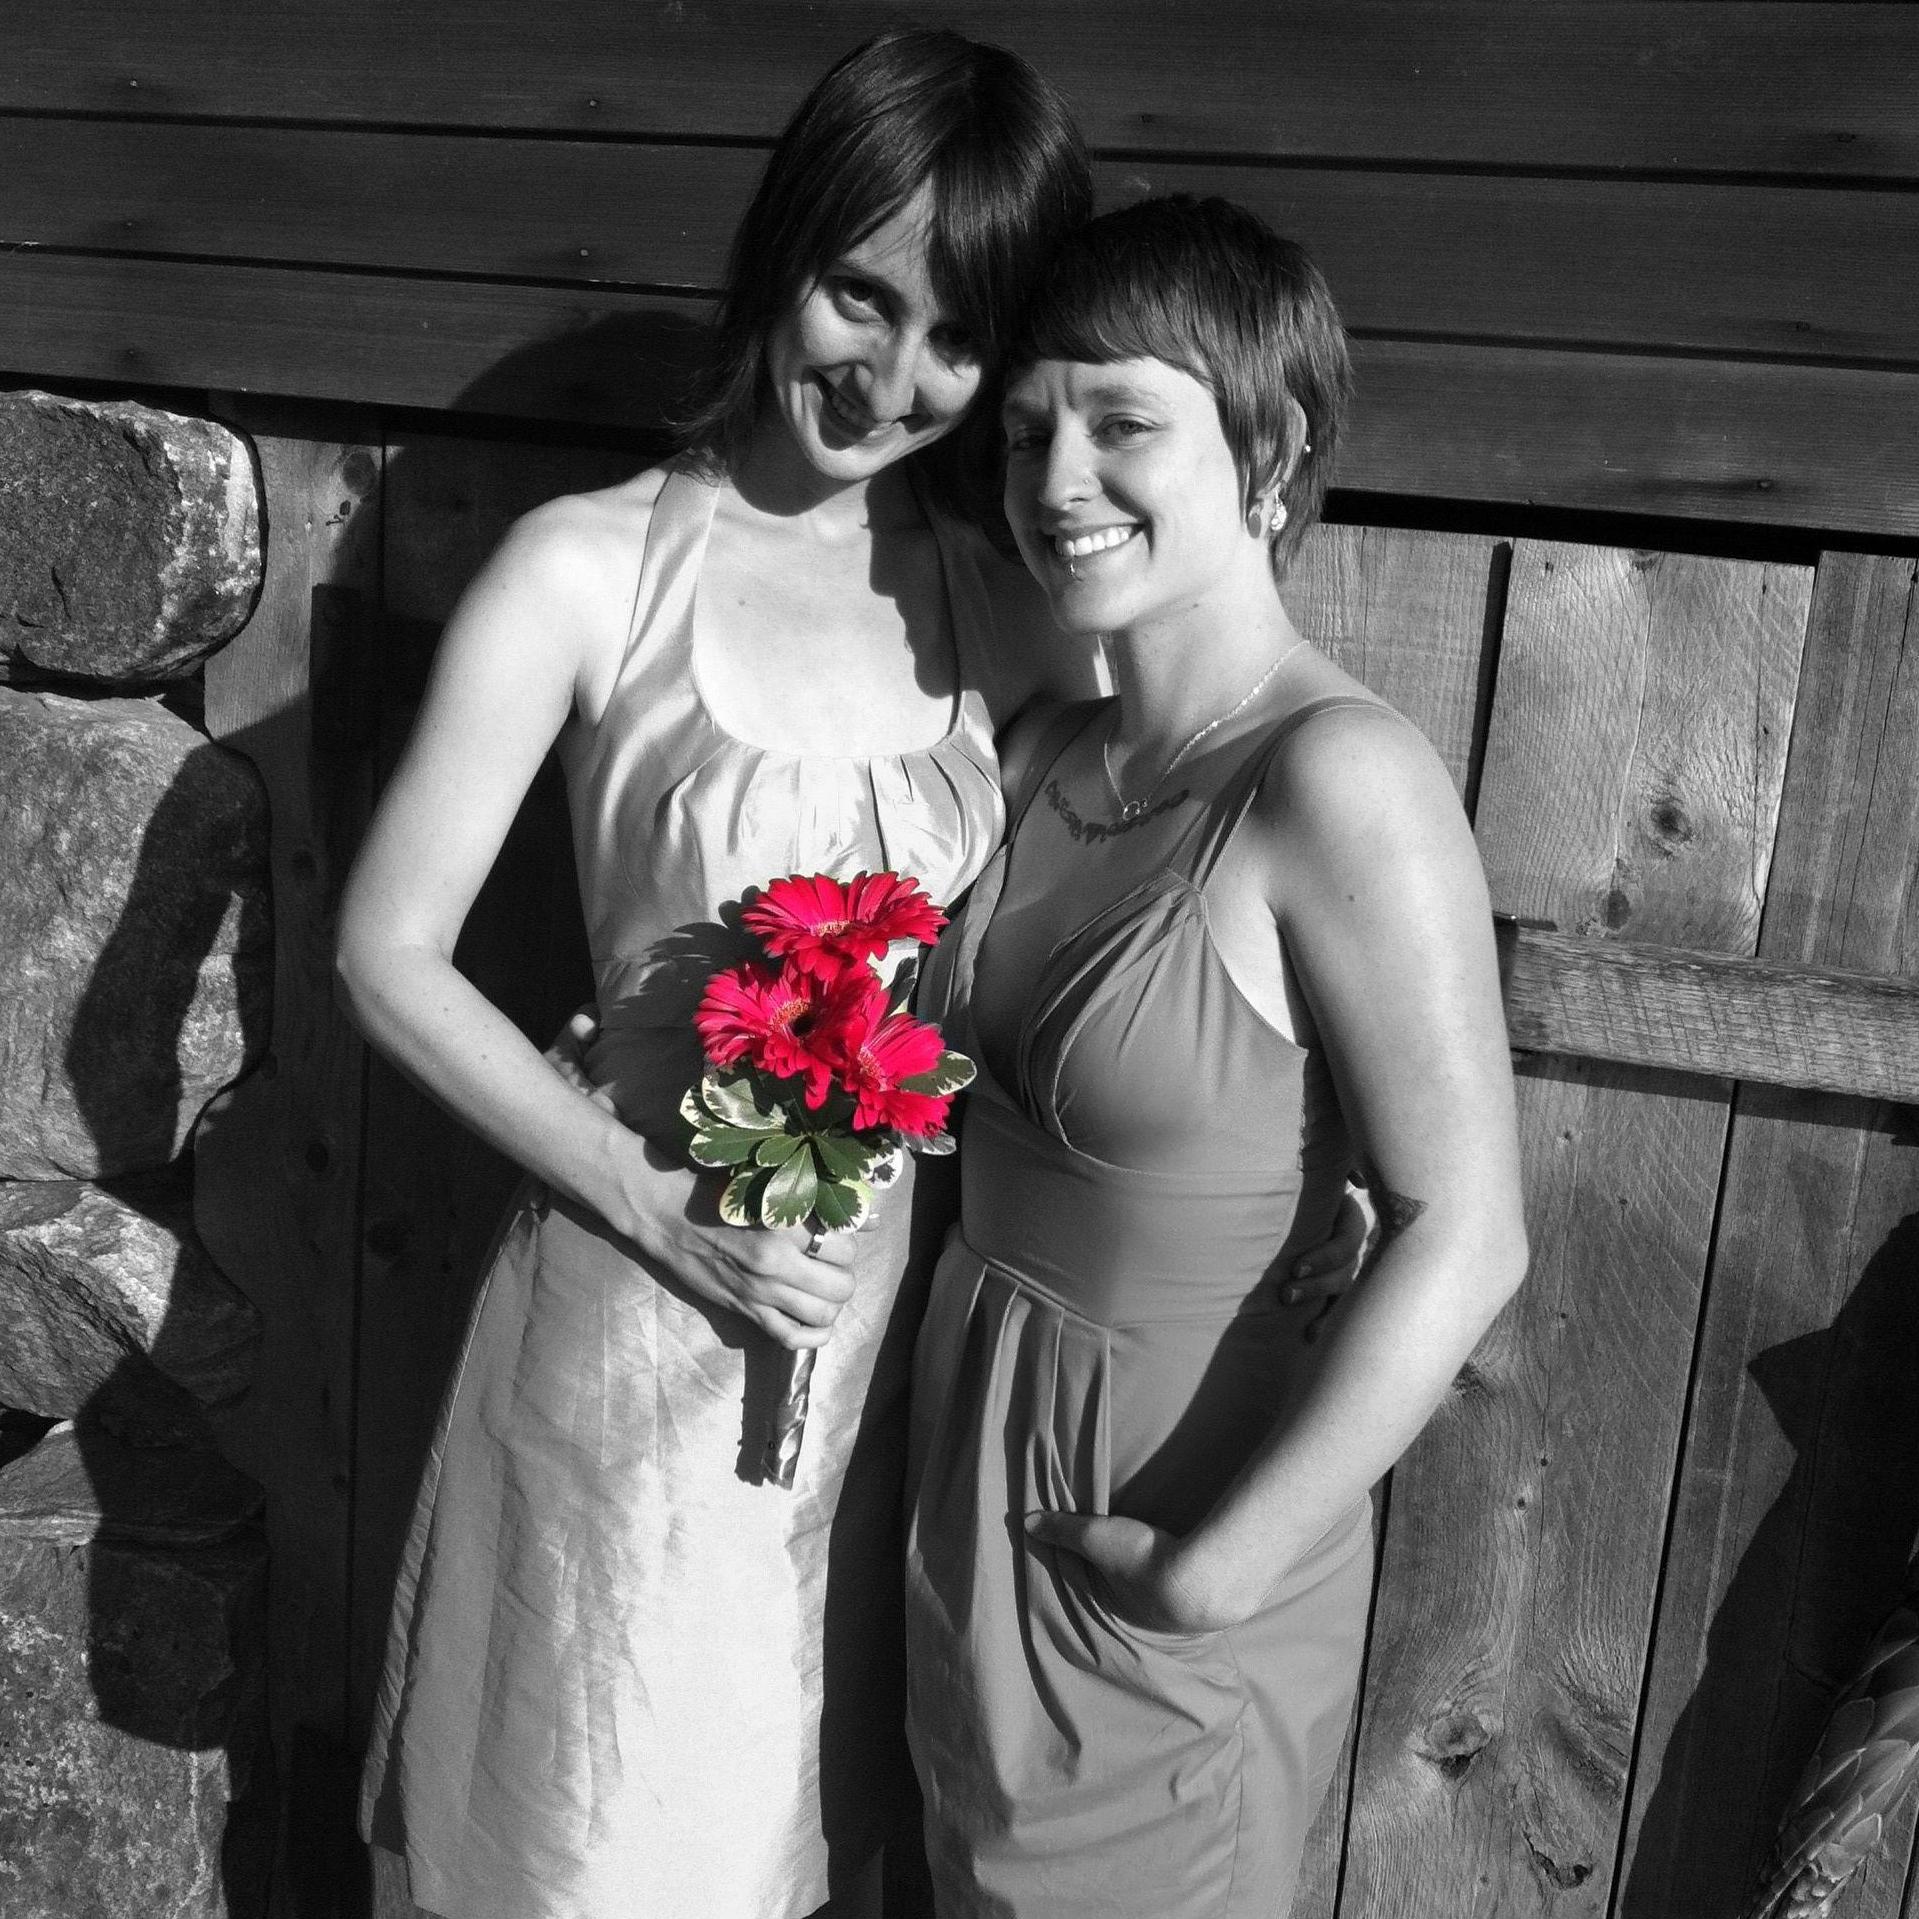 At Tasha & Danielle's wedding, 2011